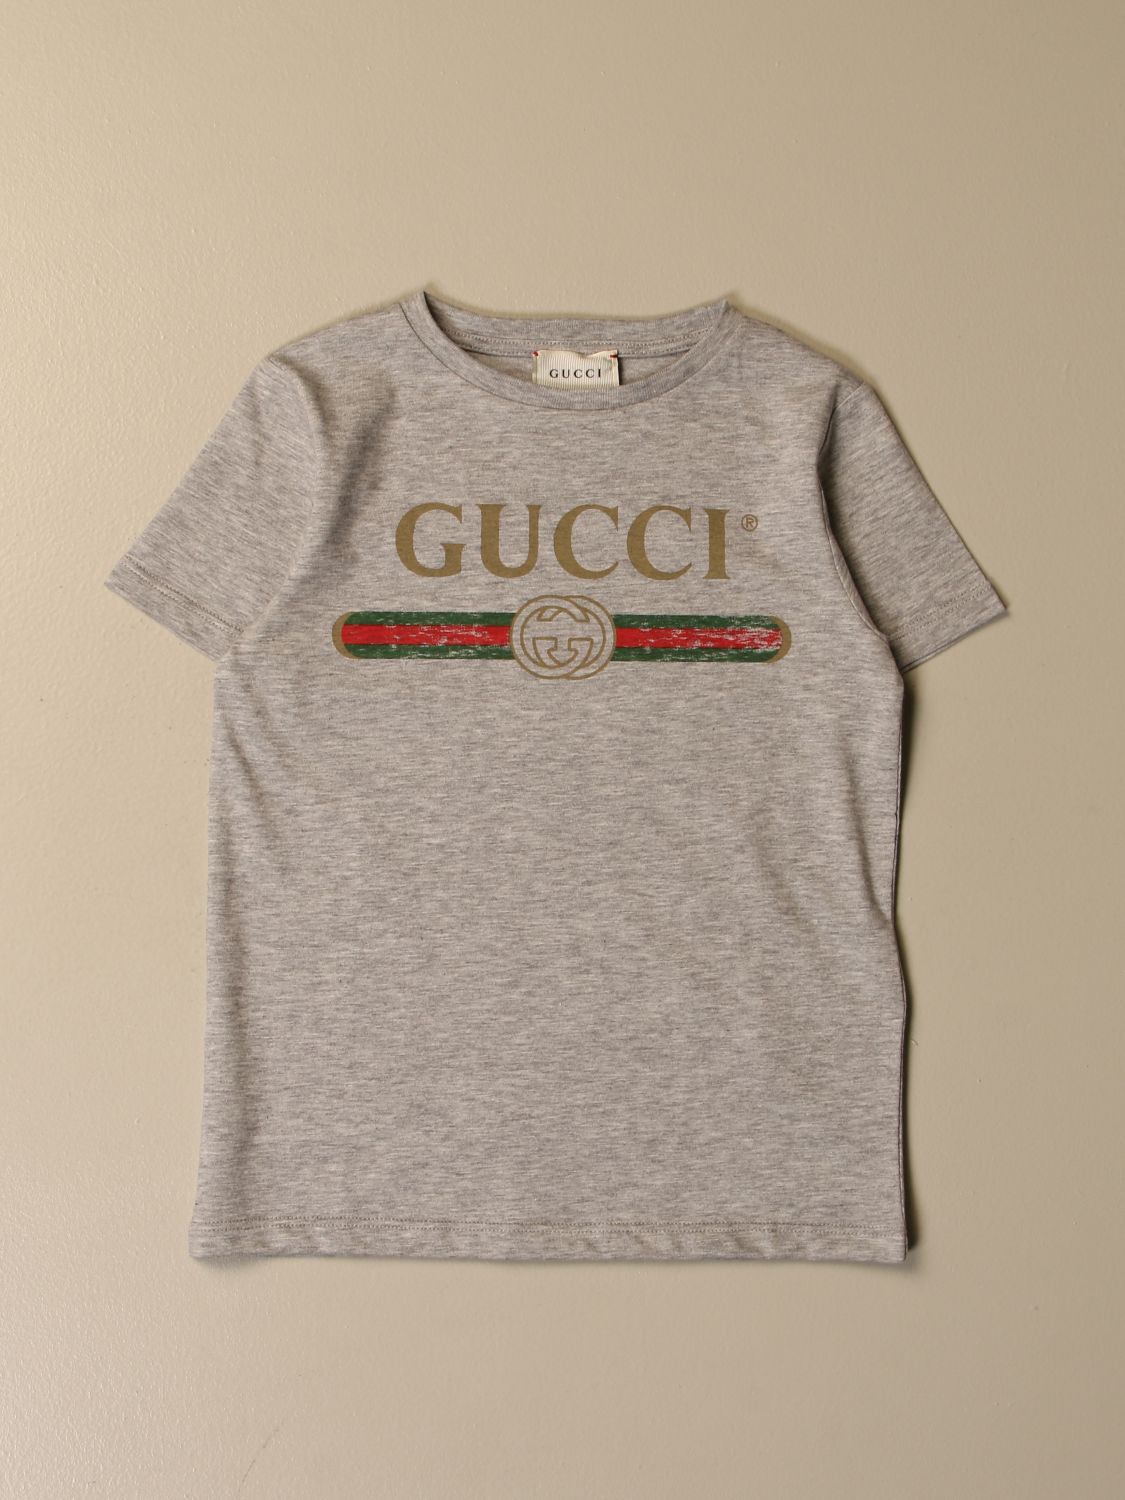 Rundt og rundt filosofi Regnjakke GUCCI: T-shirt with vintage logo - Grey | Gucci t-shirt 503628 X3L02 online  on GIGLIO.COM